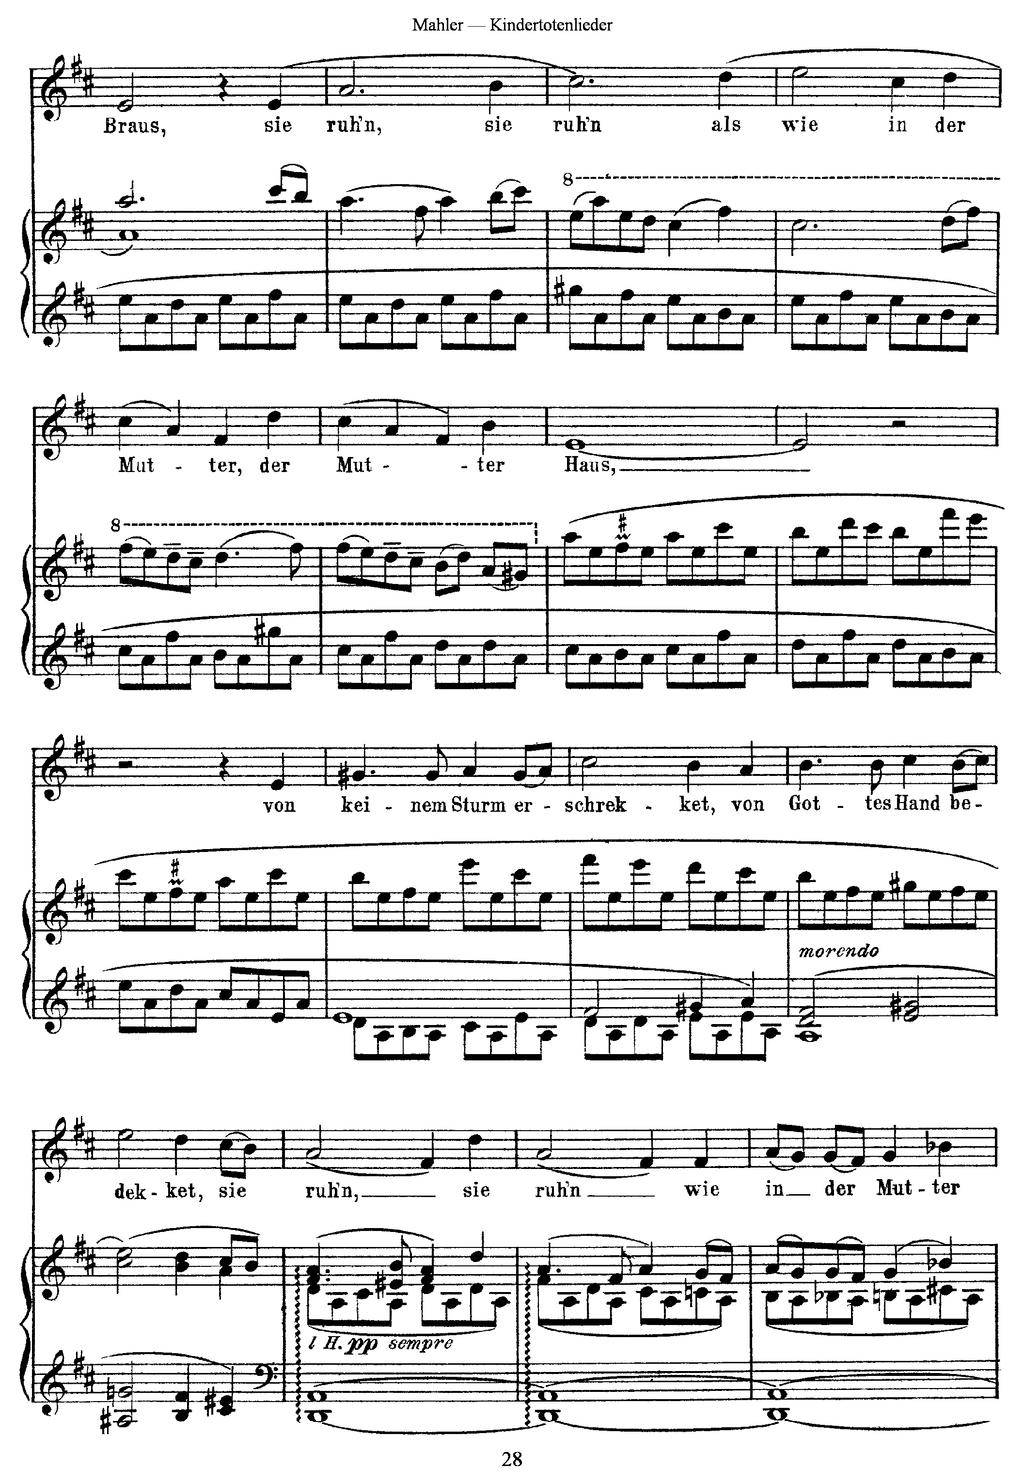 Figure 19. Mm. 118-121, fifth movement. Source: Mahler, Kindertotenlieder, 28.